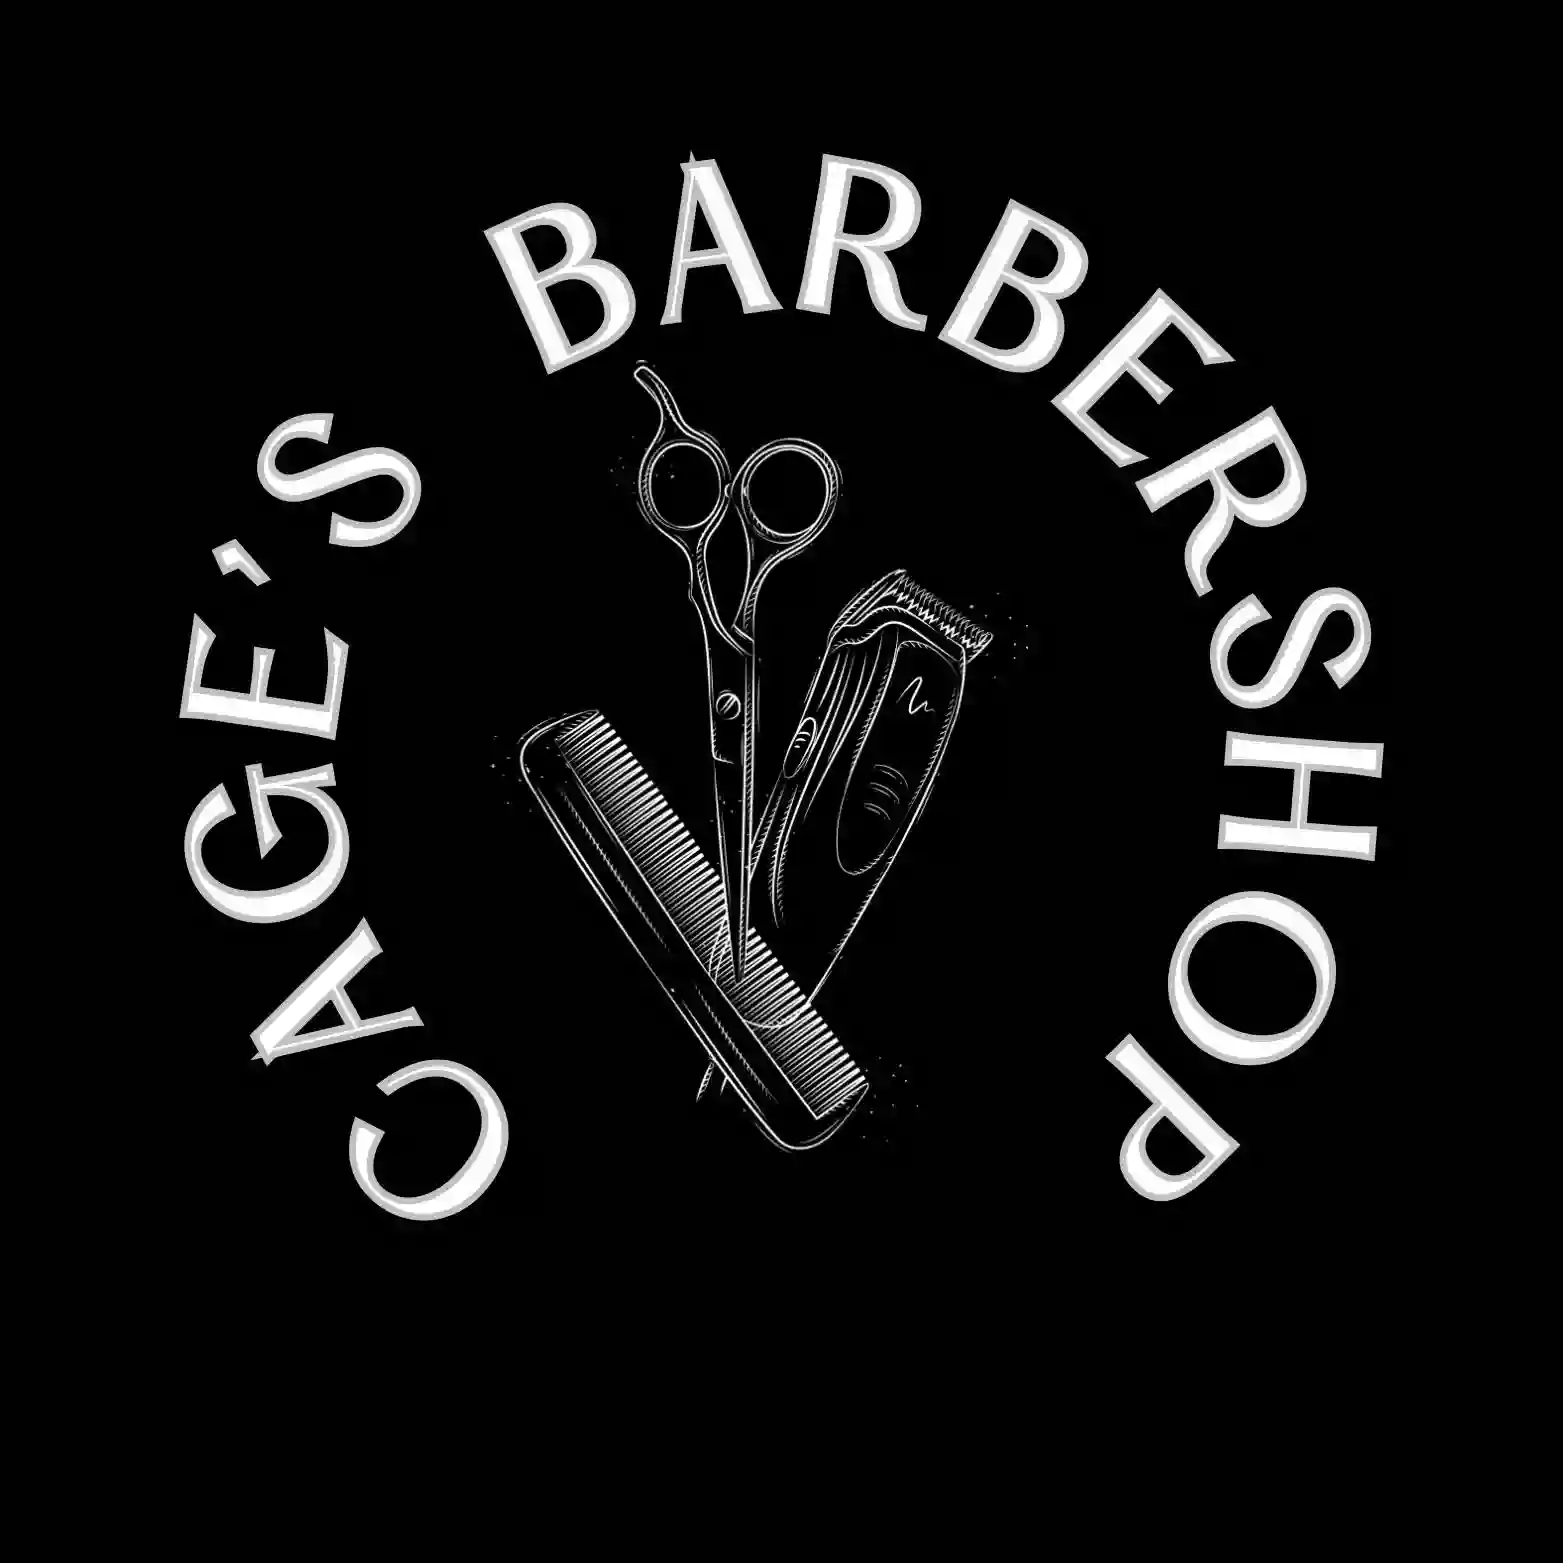 Cage’s Barbershop